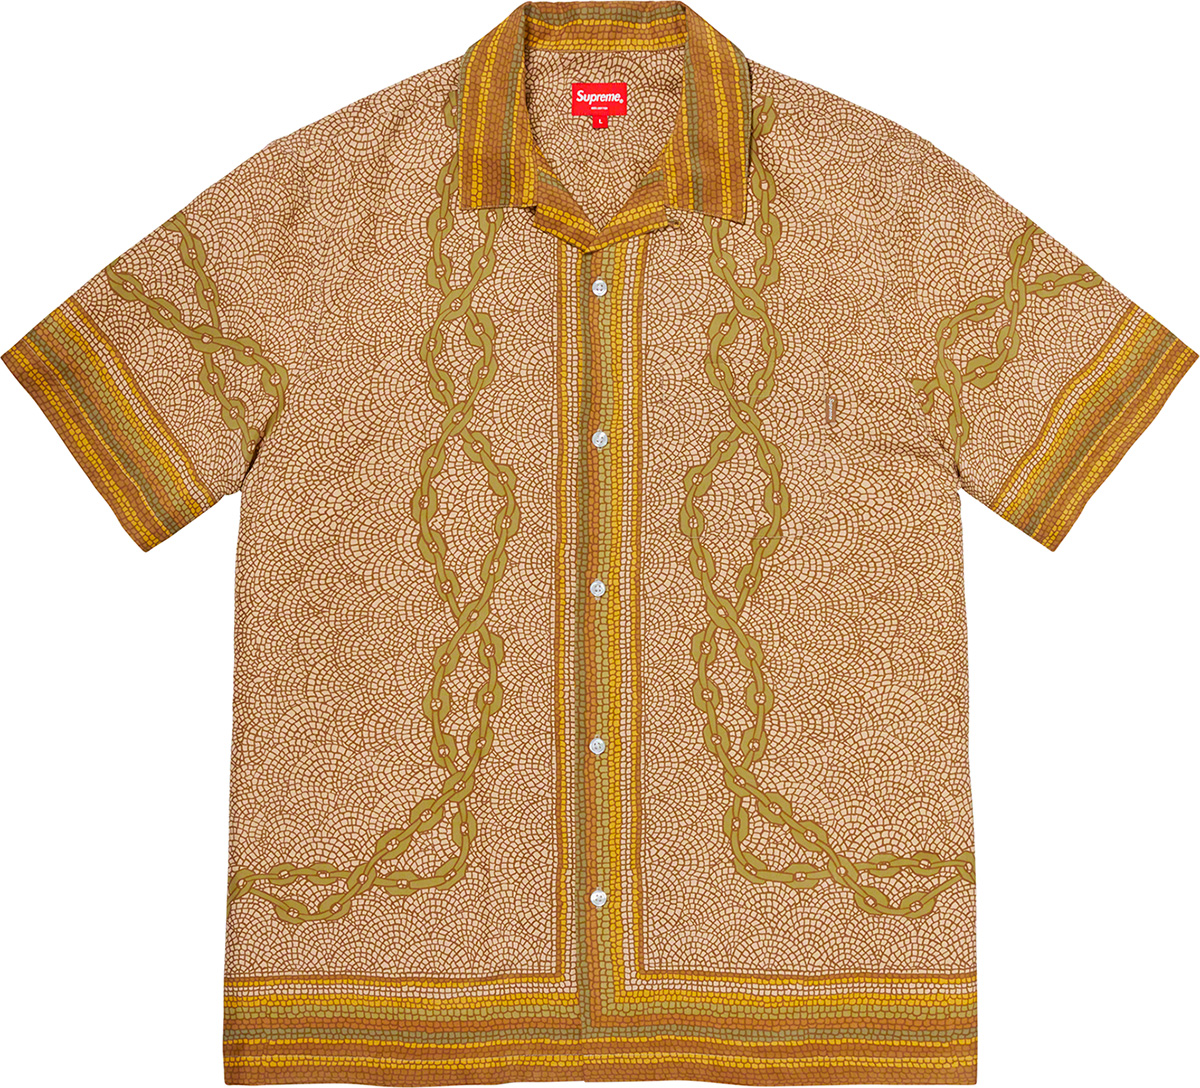 supreme Mosaic Silk S/S Shirt